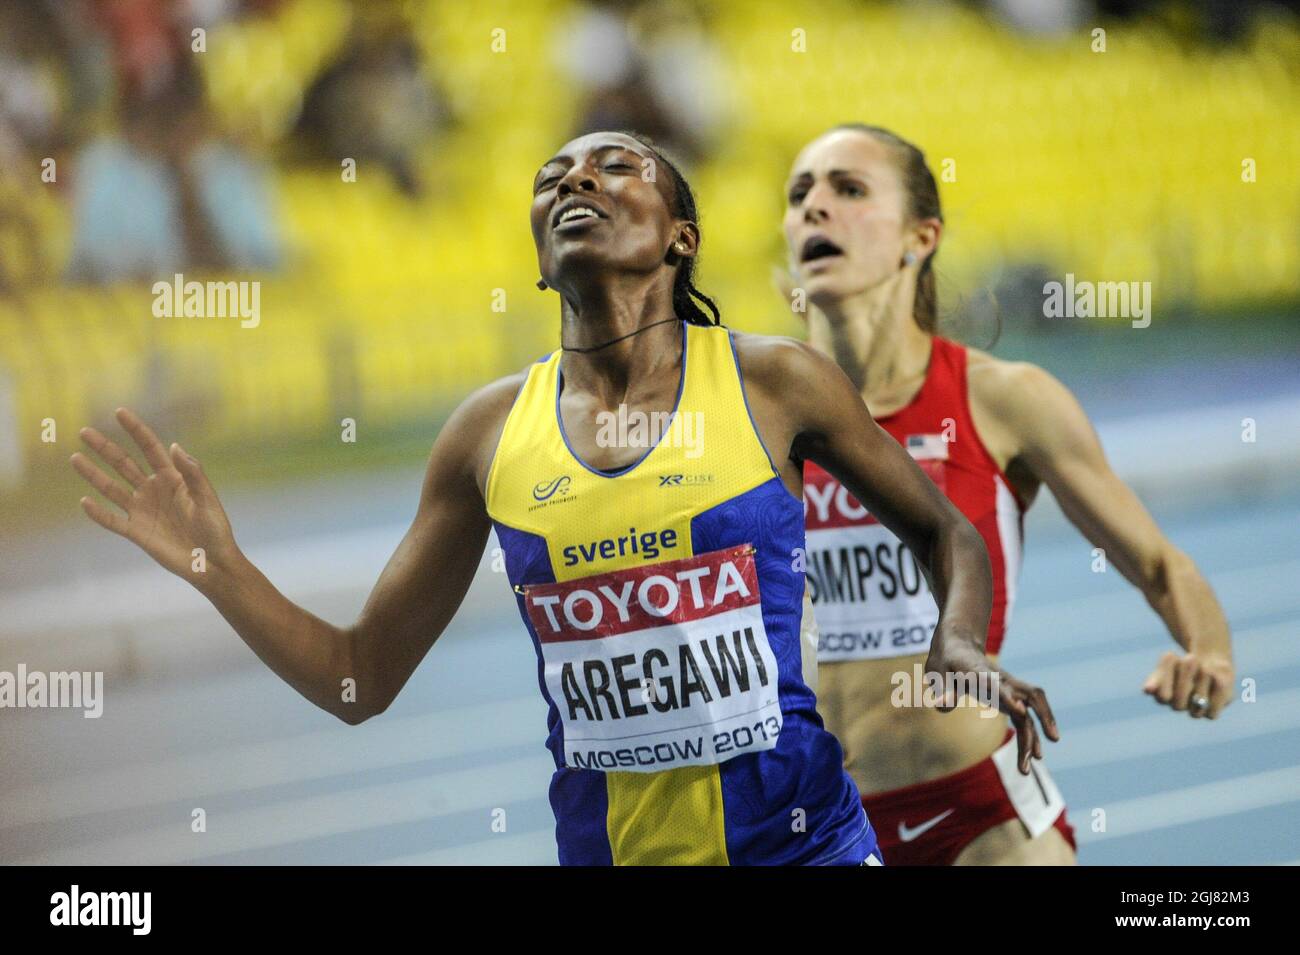 Sweden's Abeba Aregawi won the women's 1500 metres final at the 2013 IAAF World Championships at the Luzhniki stadium in Moscow on August 15, 2013, ahead of U.S. Jennifer Simpson. Photo Erik Martensson / SCANPIX / Kod 10400  Stock Photo